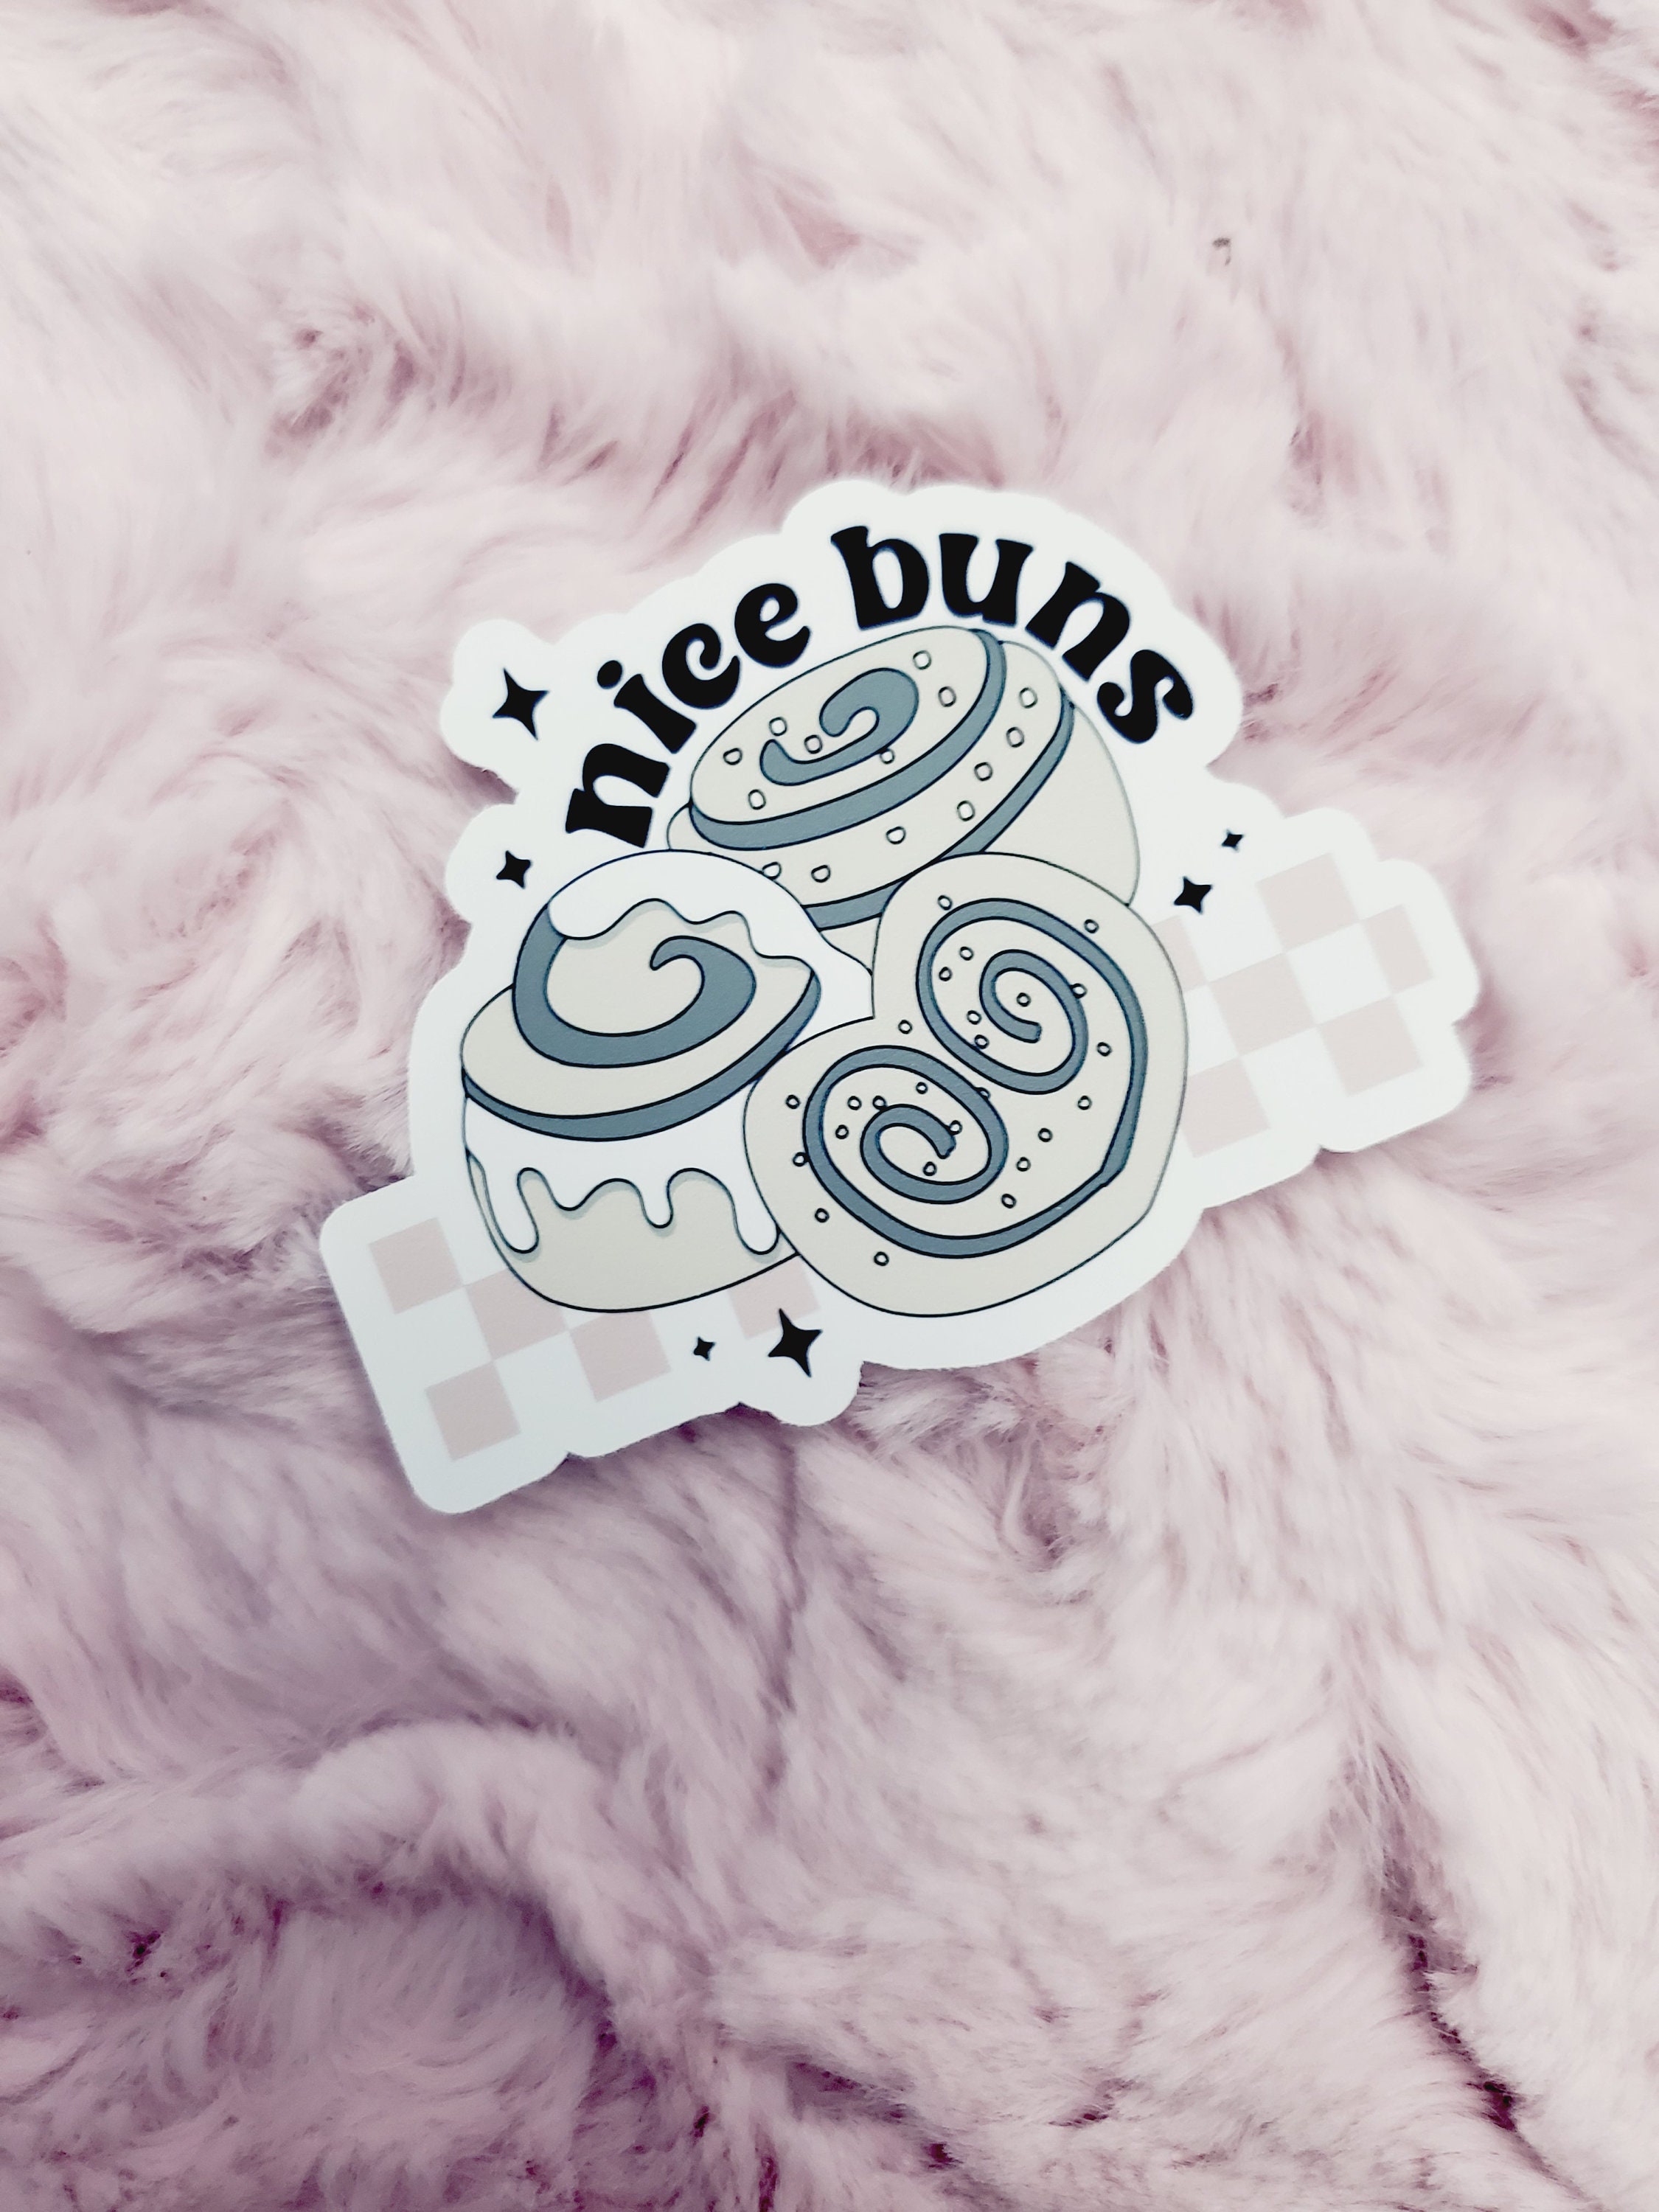 Die-Cut Stickers – Buns Bakery